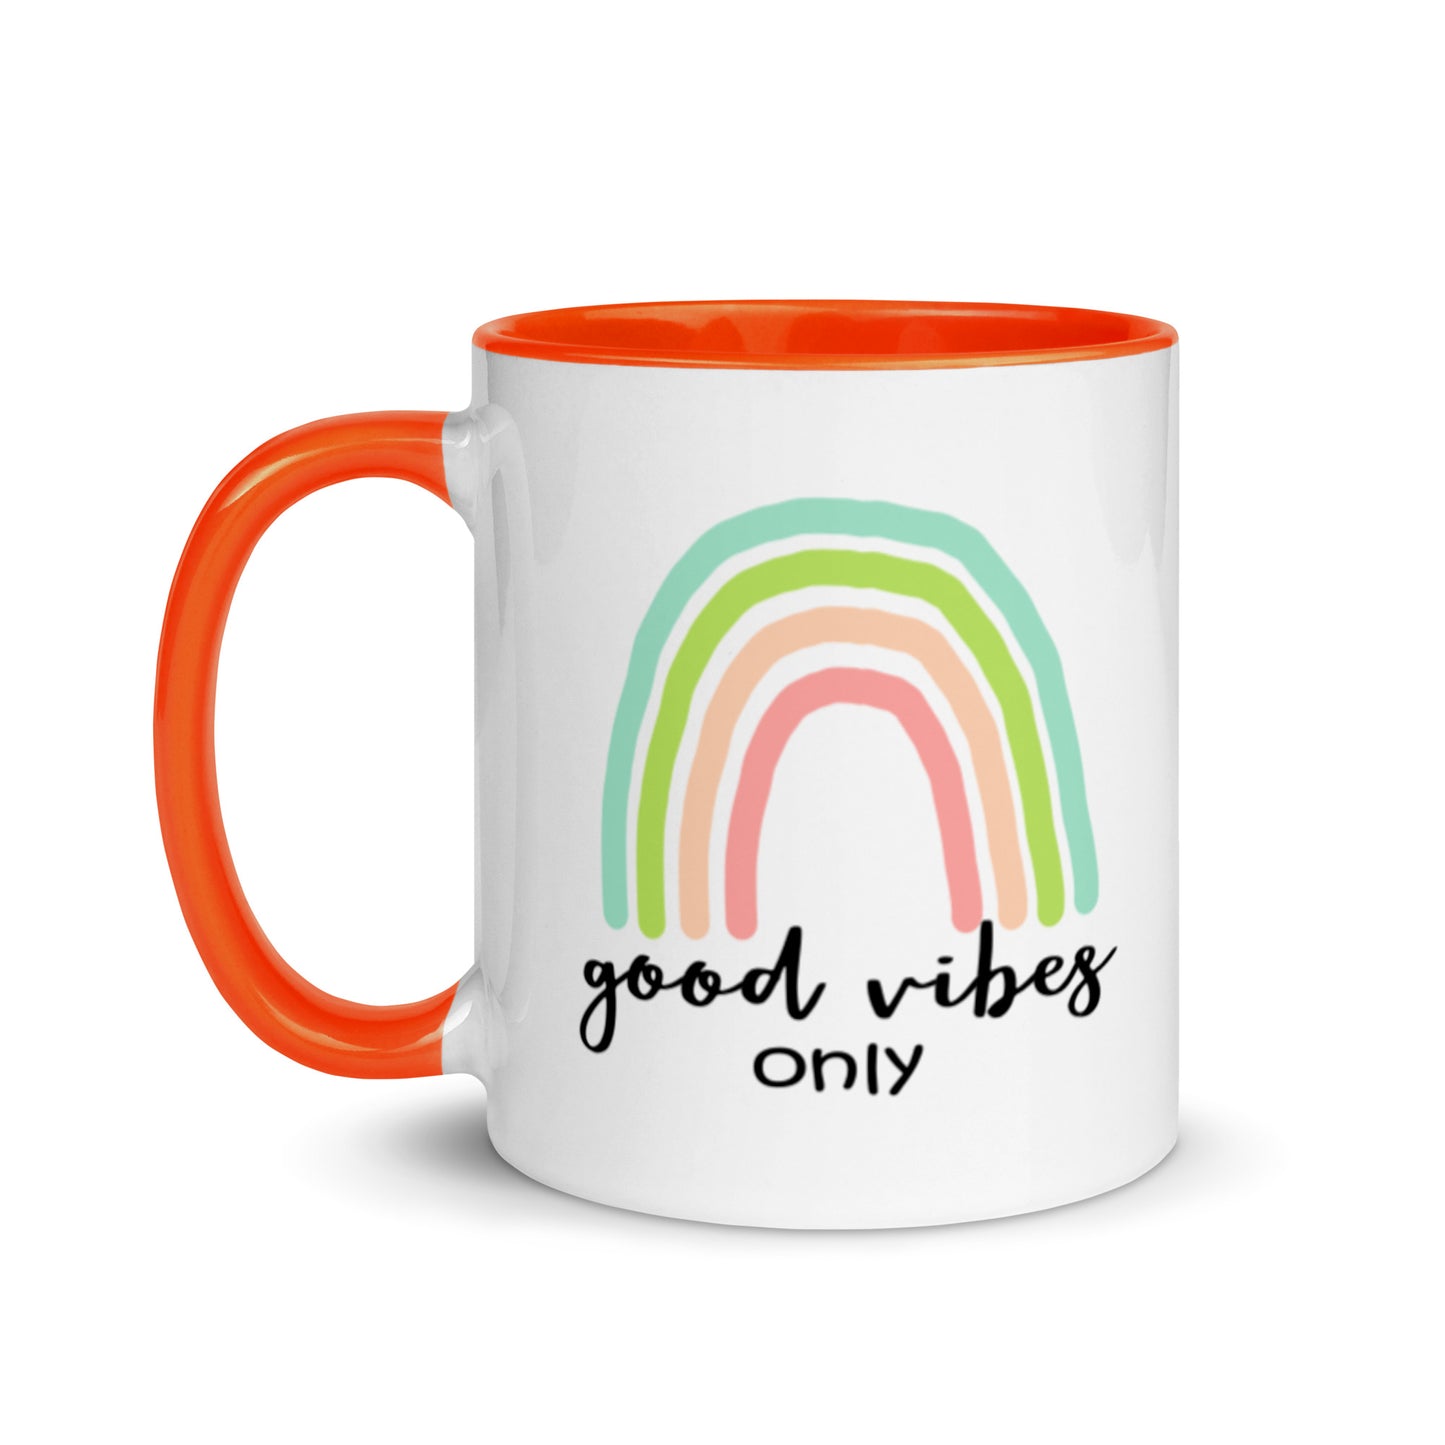 good vibes only rainbow mug - orange interior